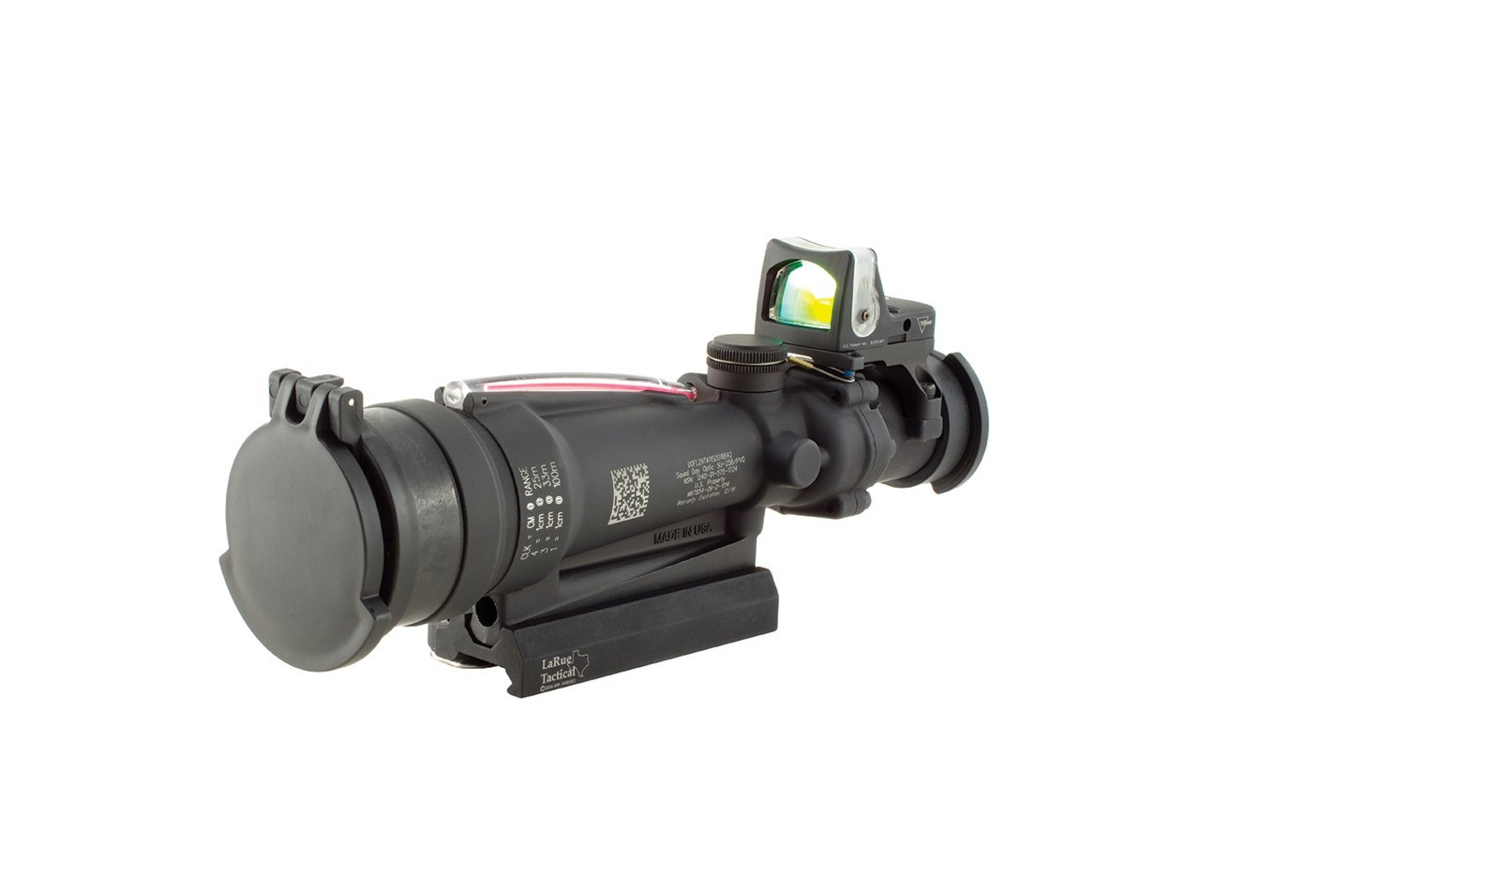 ACOG RMR 3.5x35 BAC Riflescope - M249
Trijicon